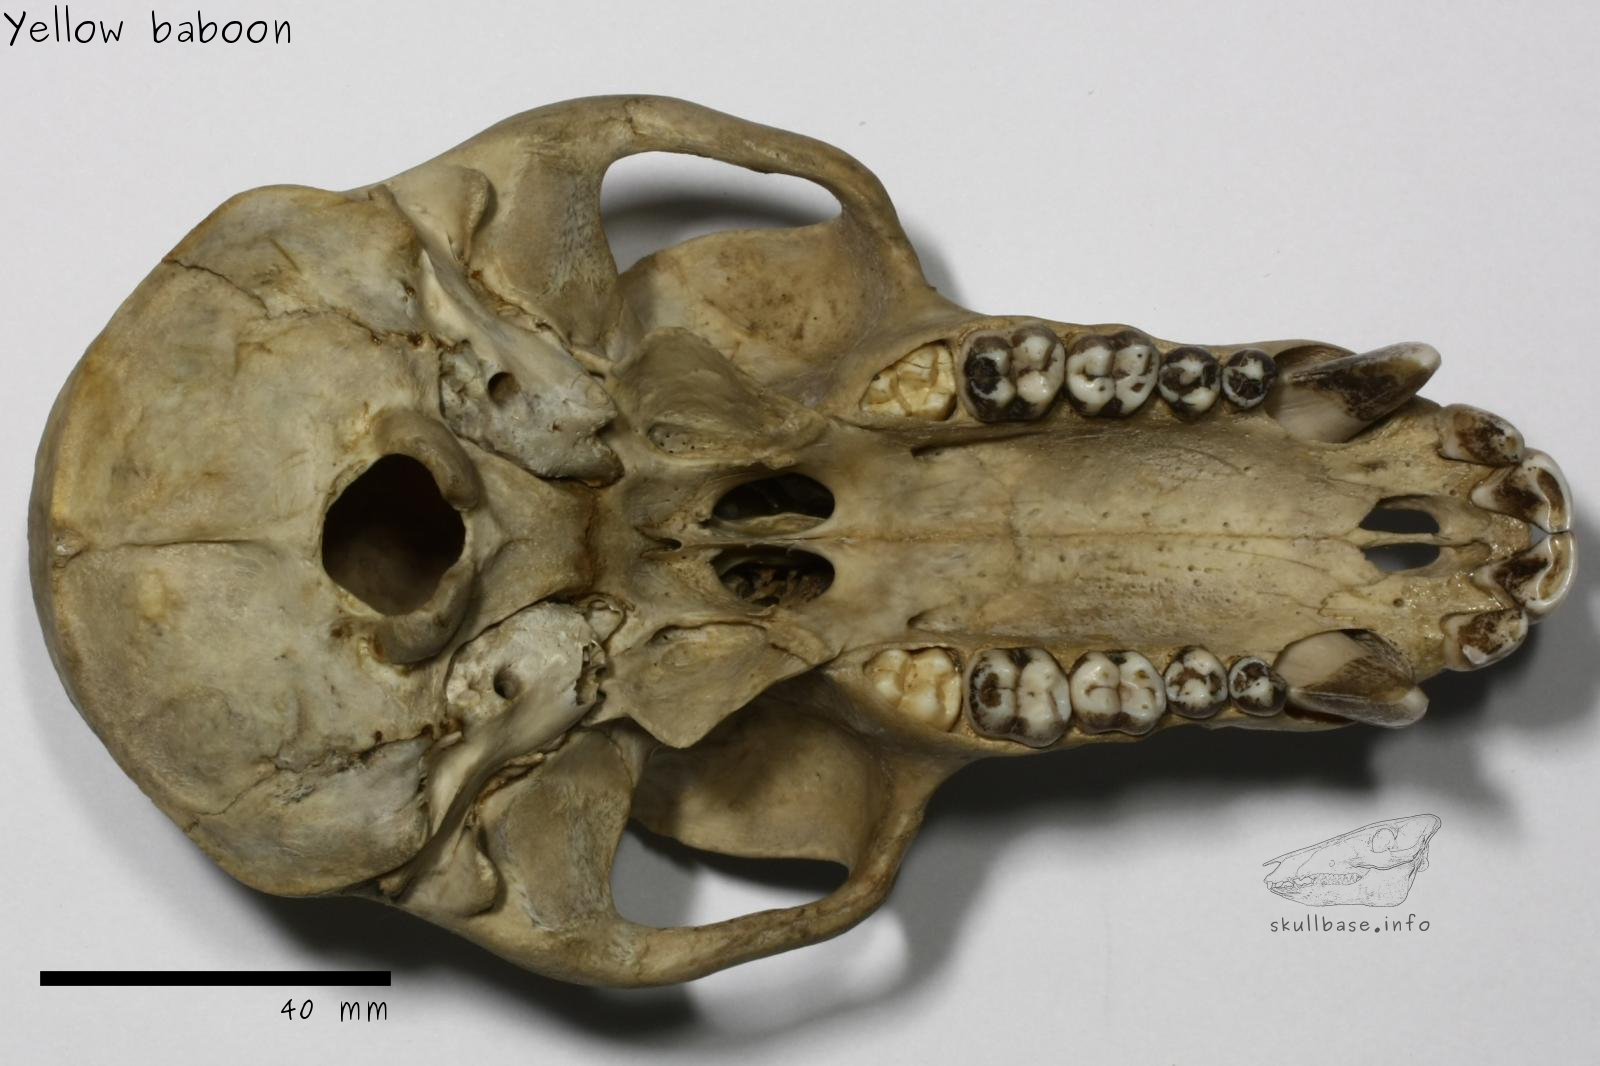 Yellow baboon (Papio cynocephalus cynocephalus) skull ventral view